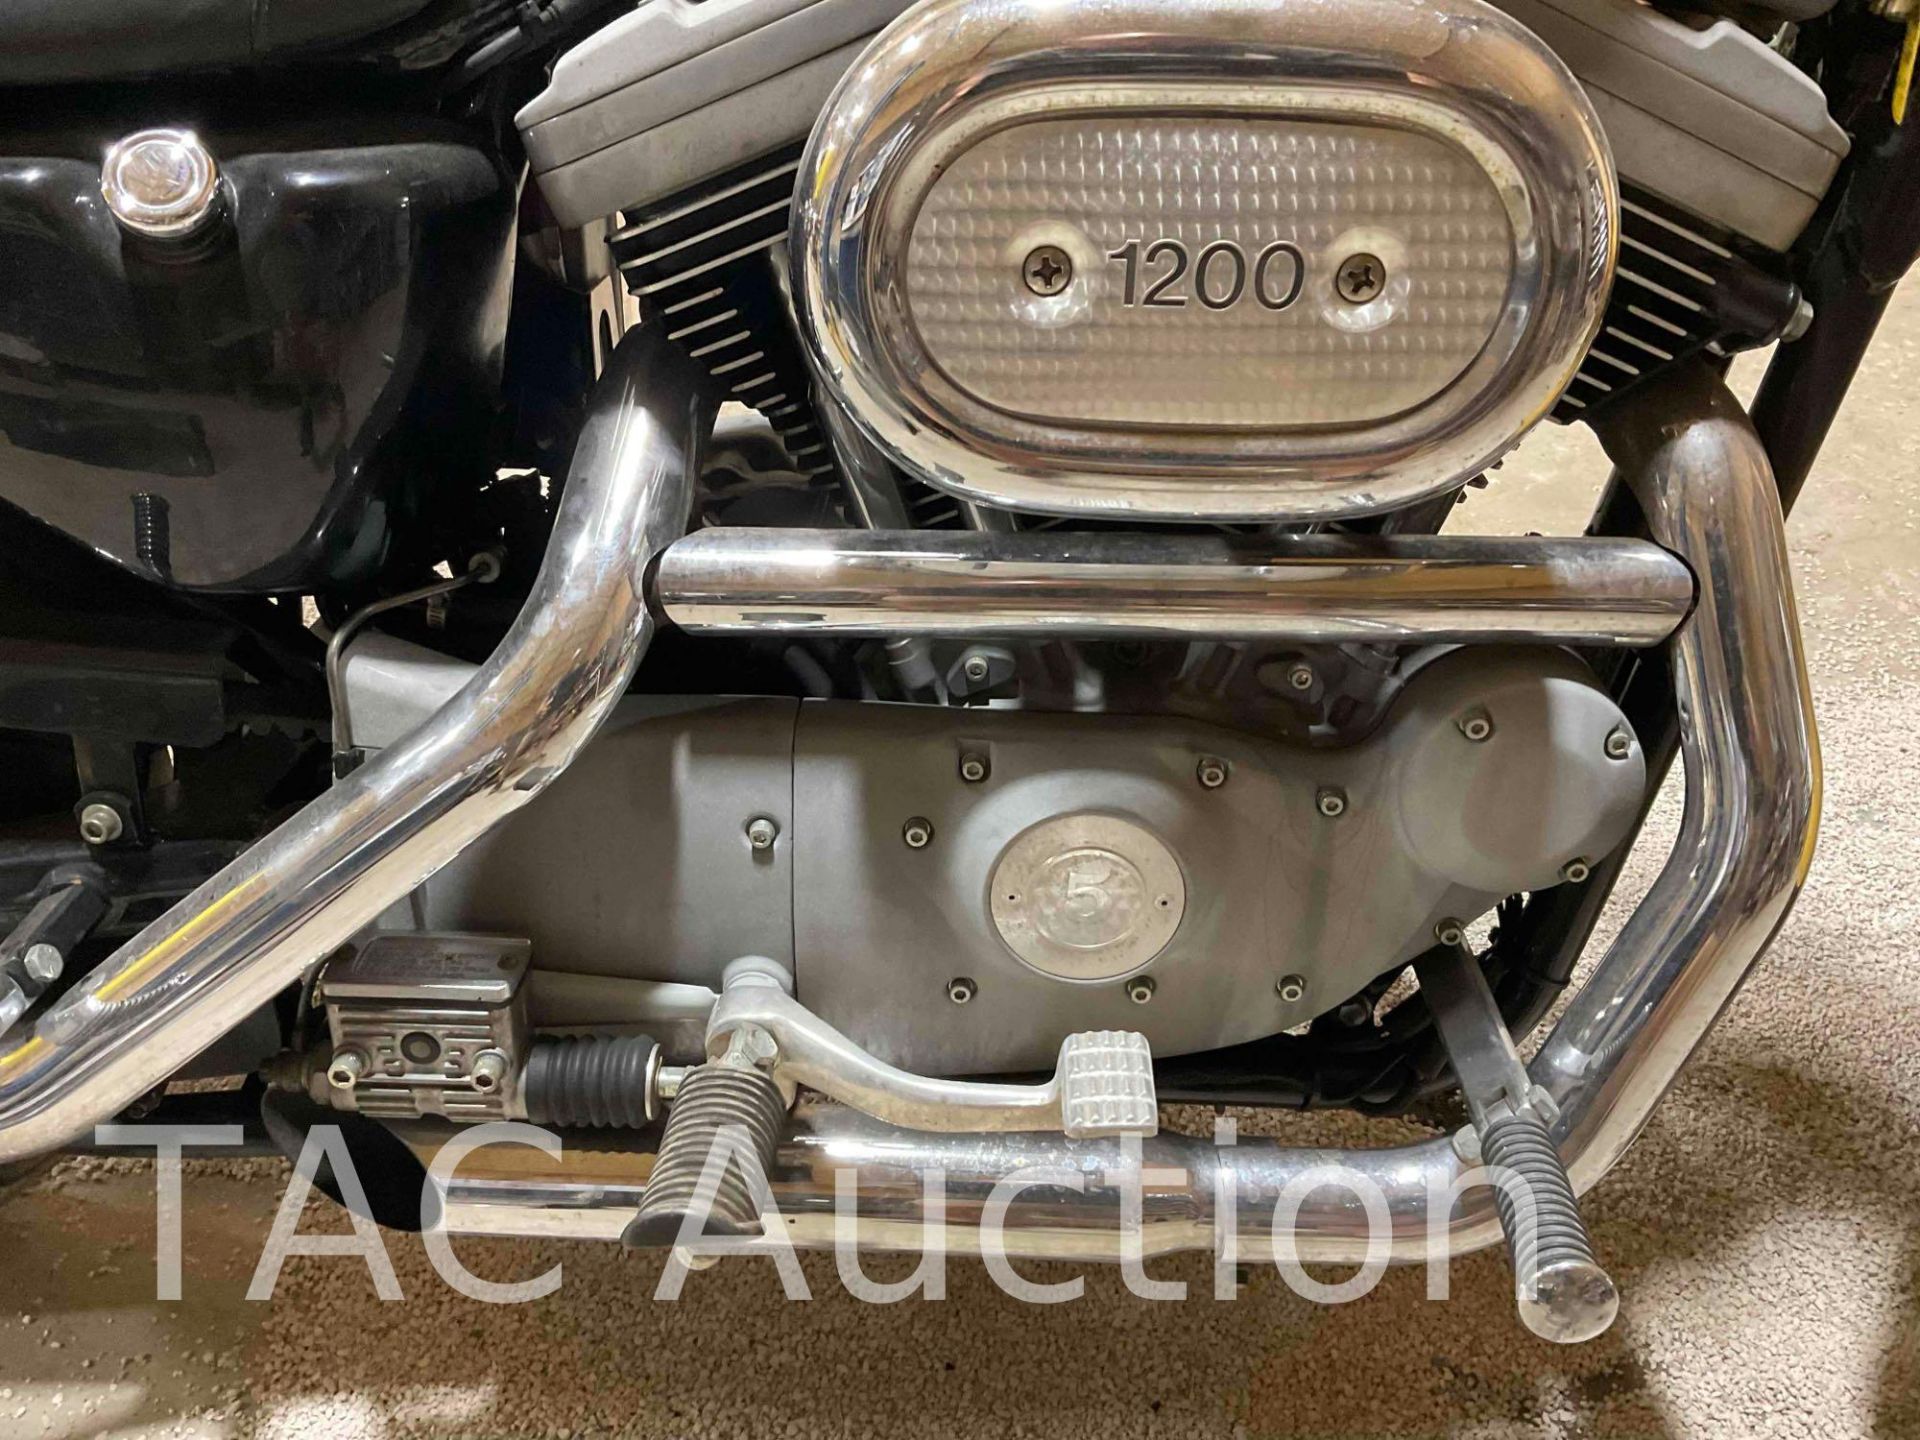 1999 Harley Davidson XL1200S - Image 9 of 12